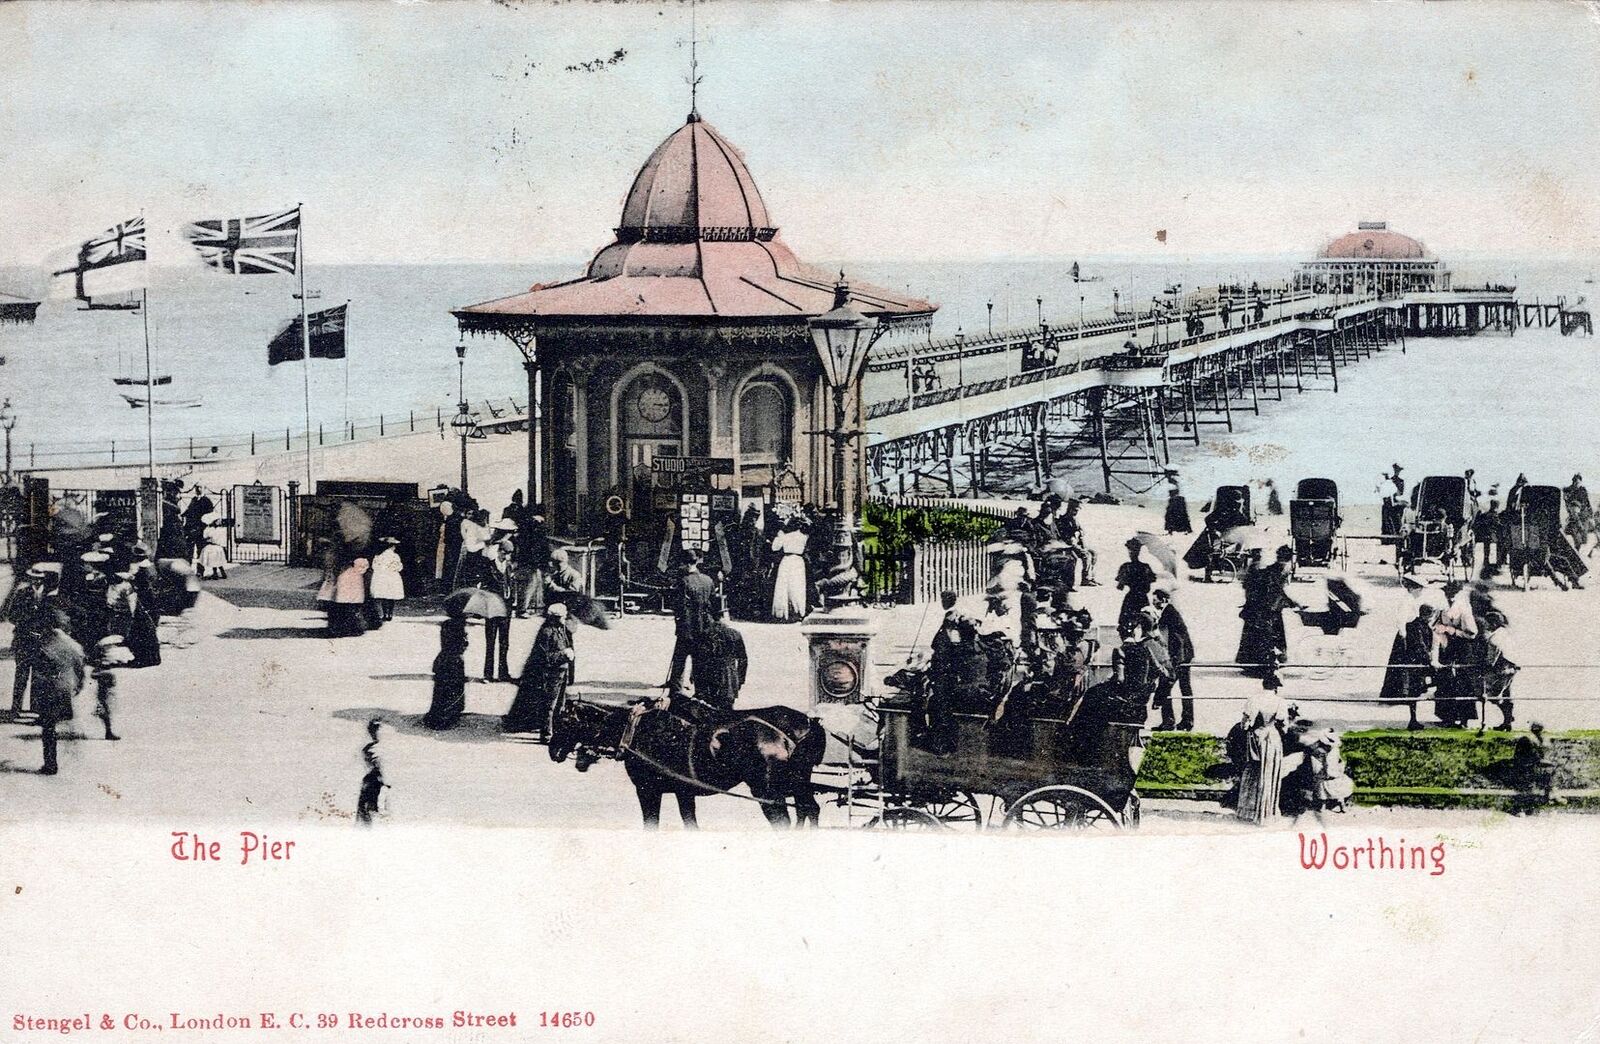 WORTHING - The Pier Postcard - England - 1906